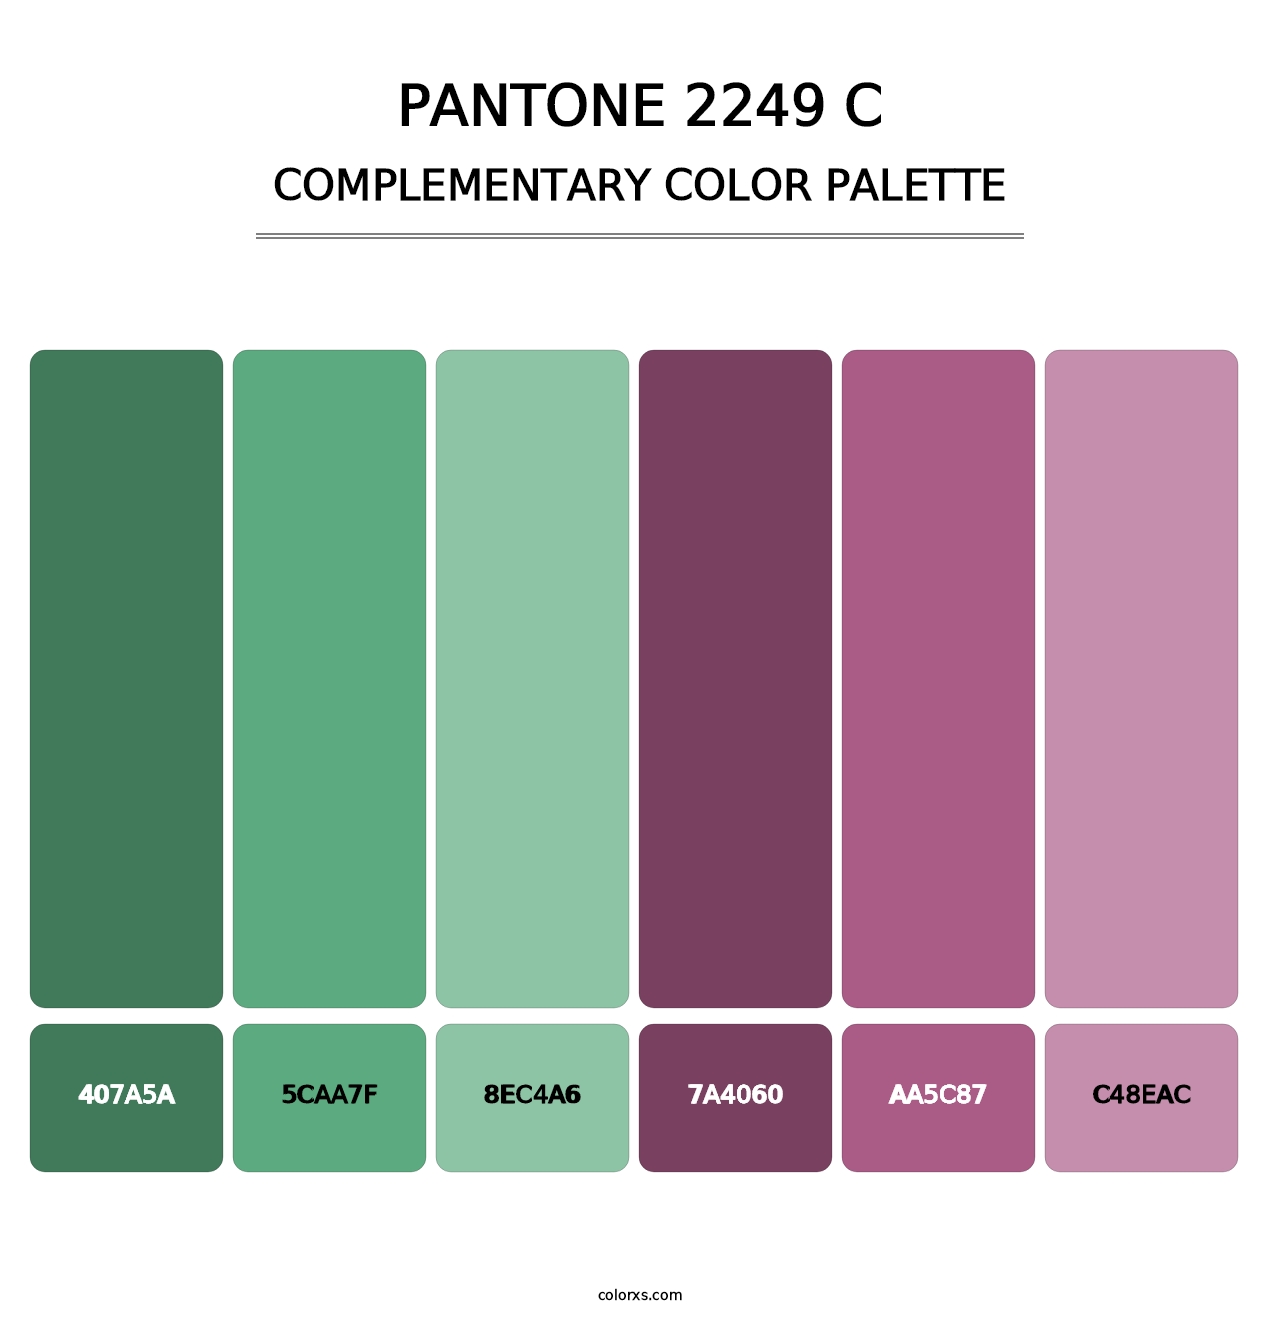 PANTONE 2249 C - Complementary Color Palette